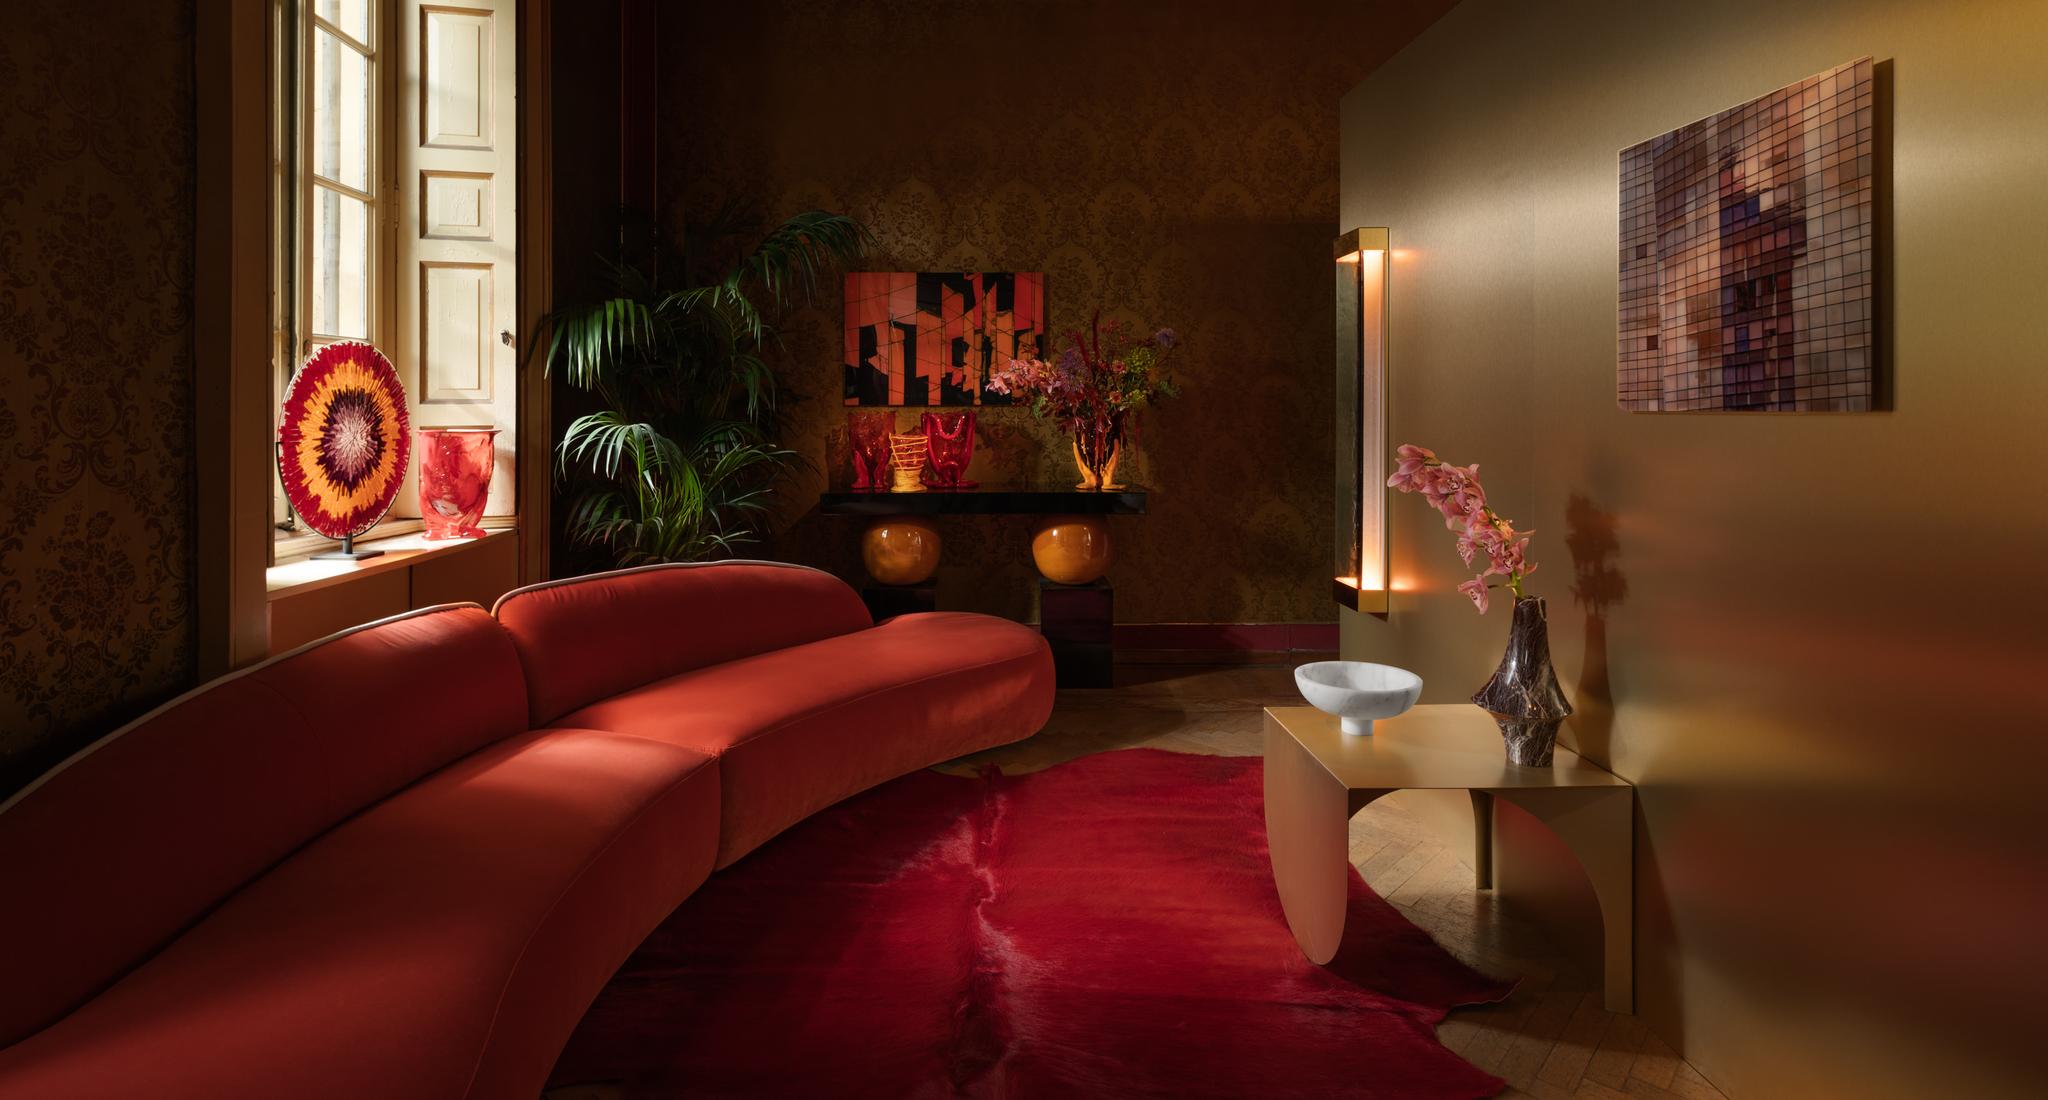 L'Appartamento : Le Salon par Kingston Lafferty Design